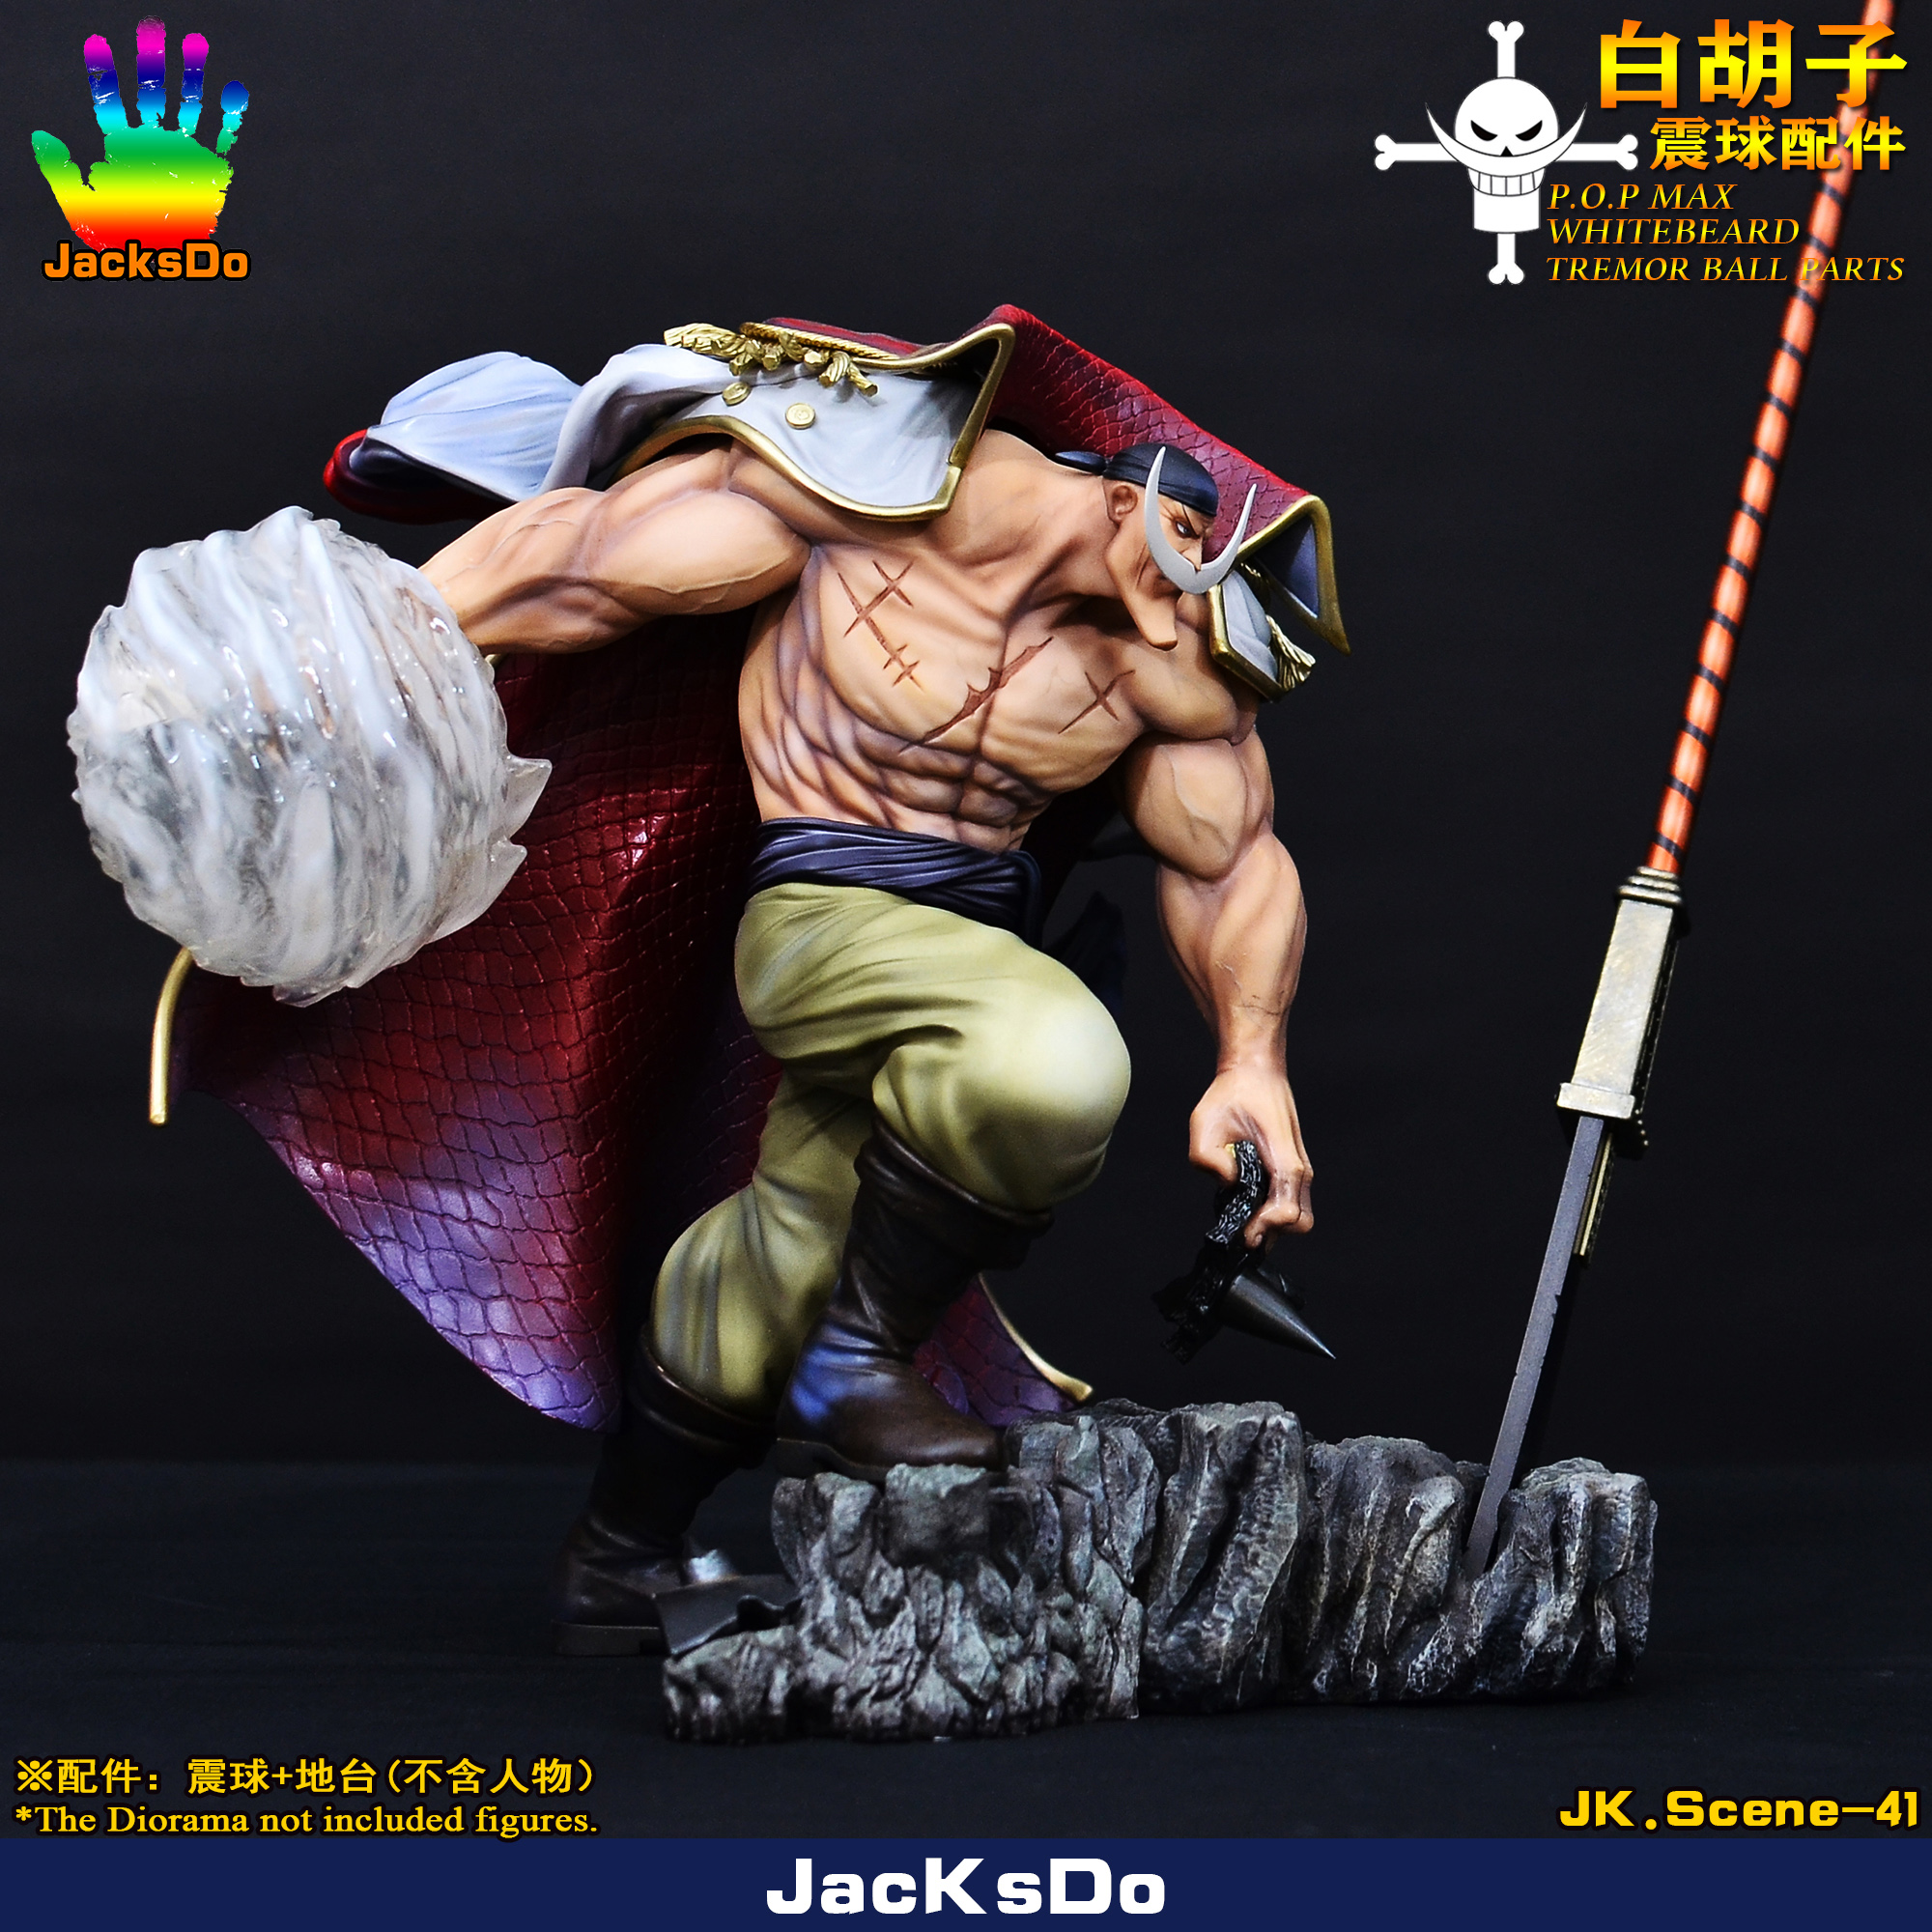 In Stock Jacksdo One Piece P O Pmax Whitebeard Tremor Ball Parts Resin Statue